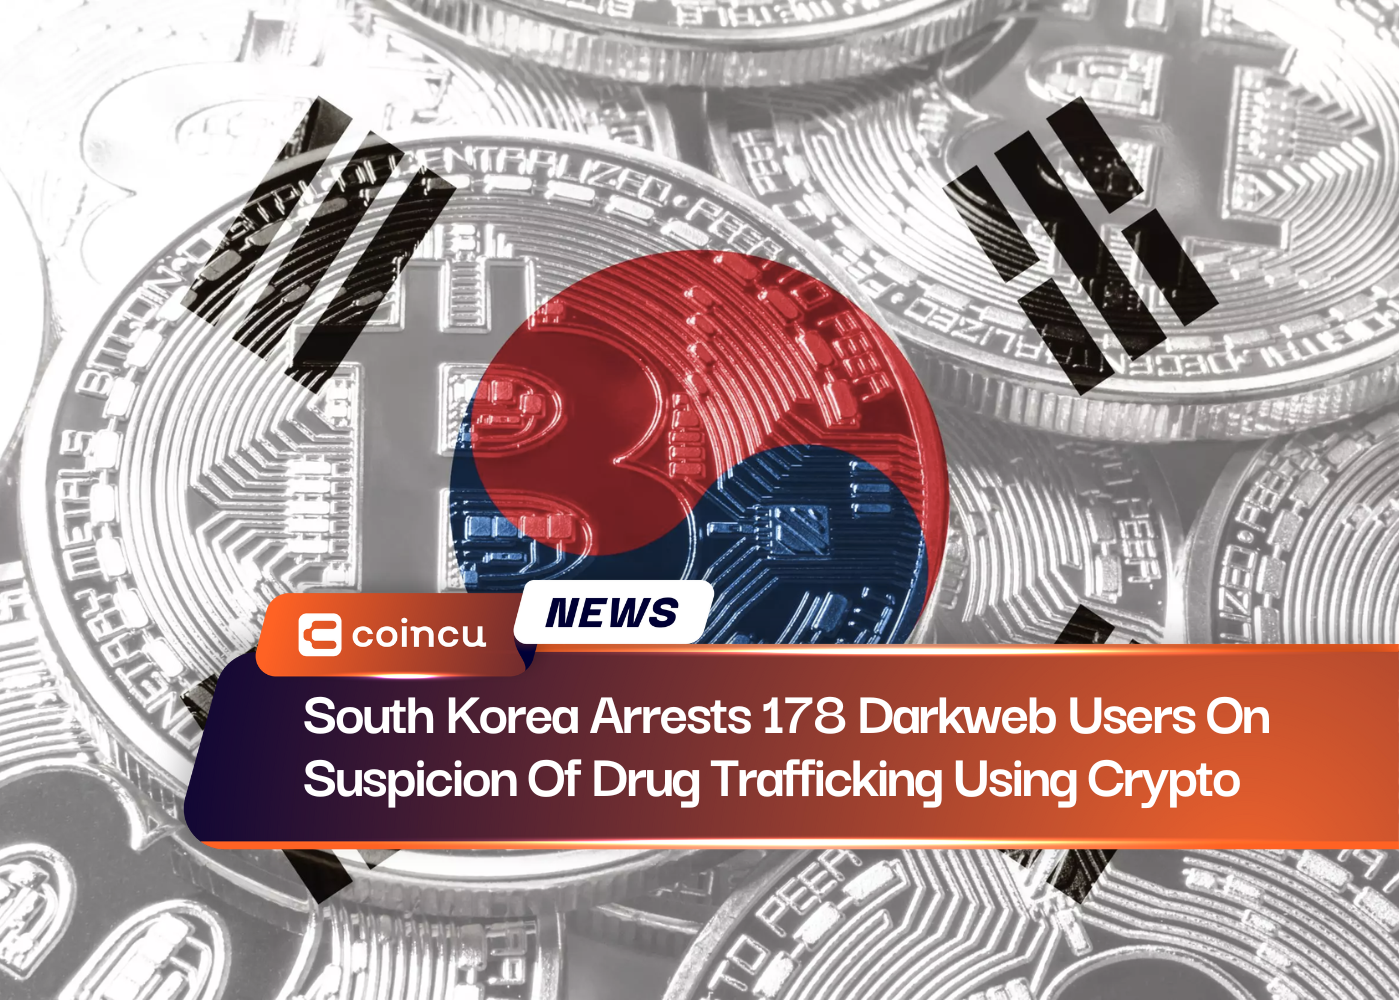 South Korea Arrests 178 Darkweb Users On Suspicion Of Drug Trafficking Using Crypto